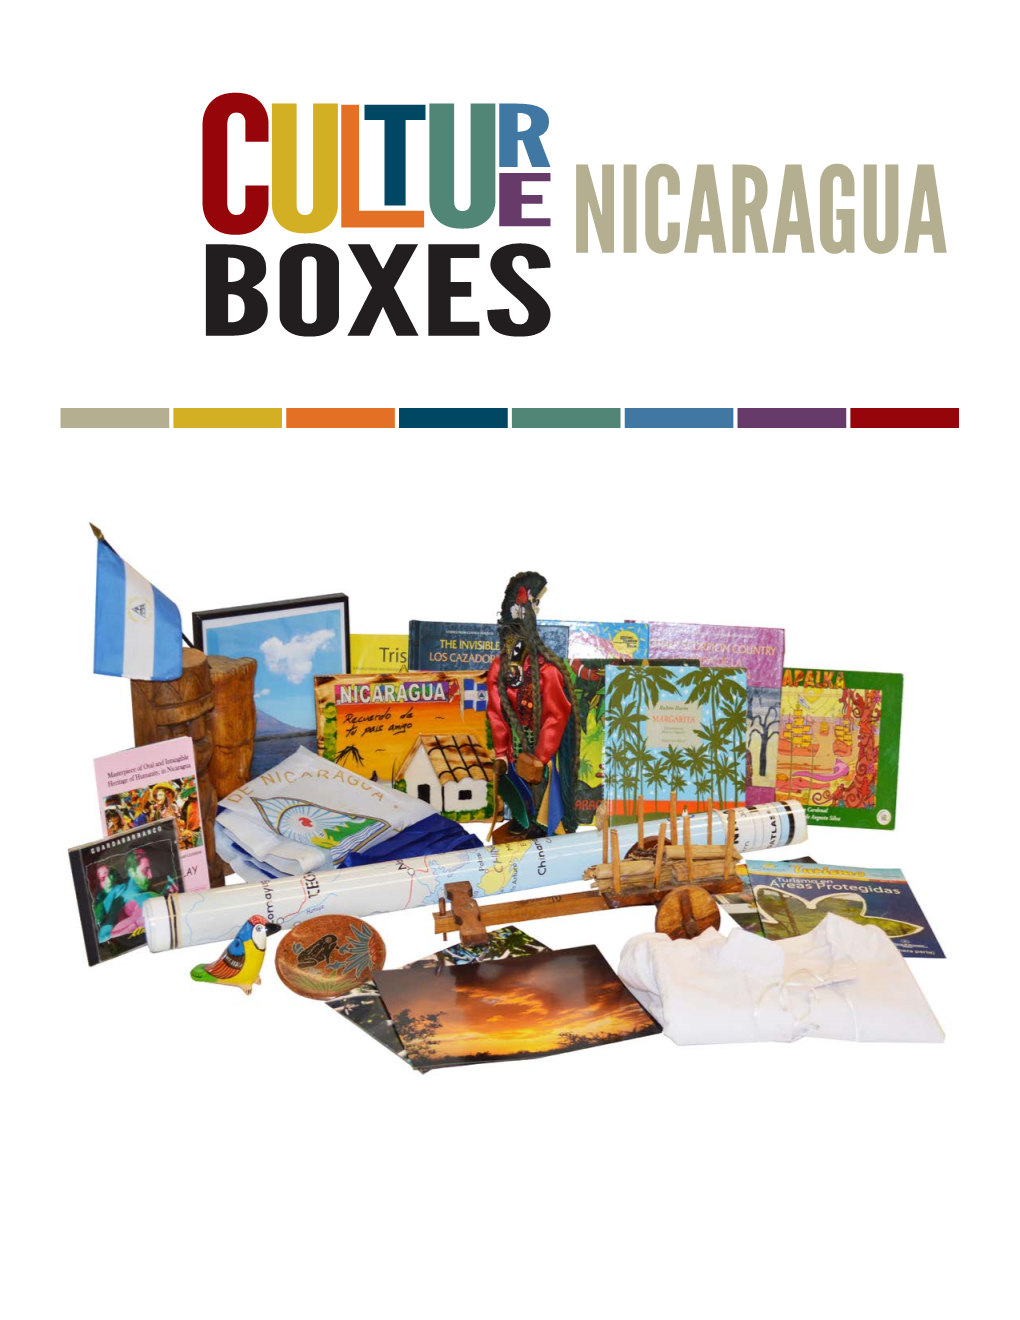 Culture Box of Nicaragua